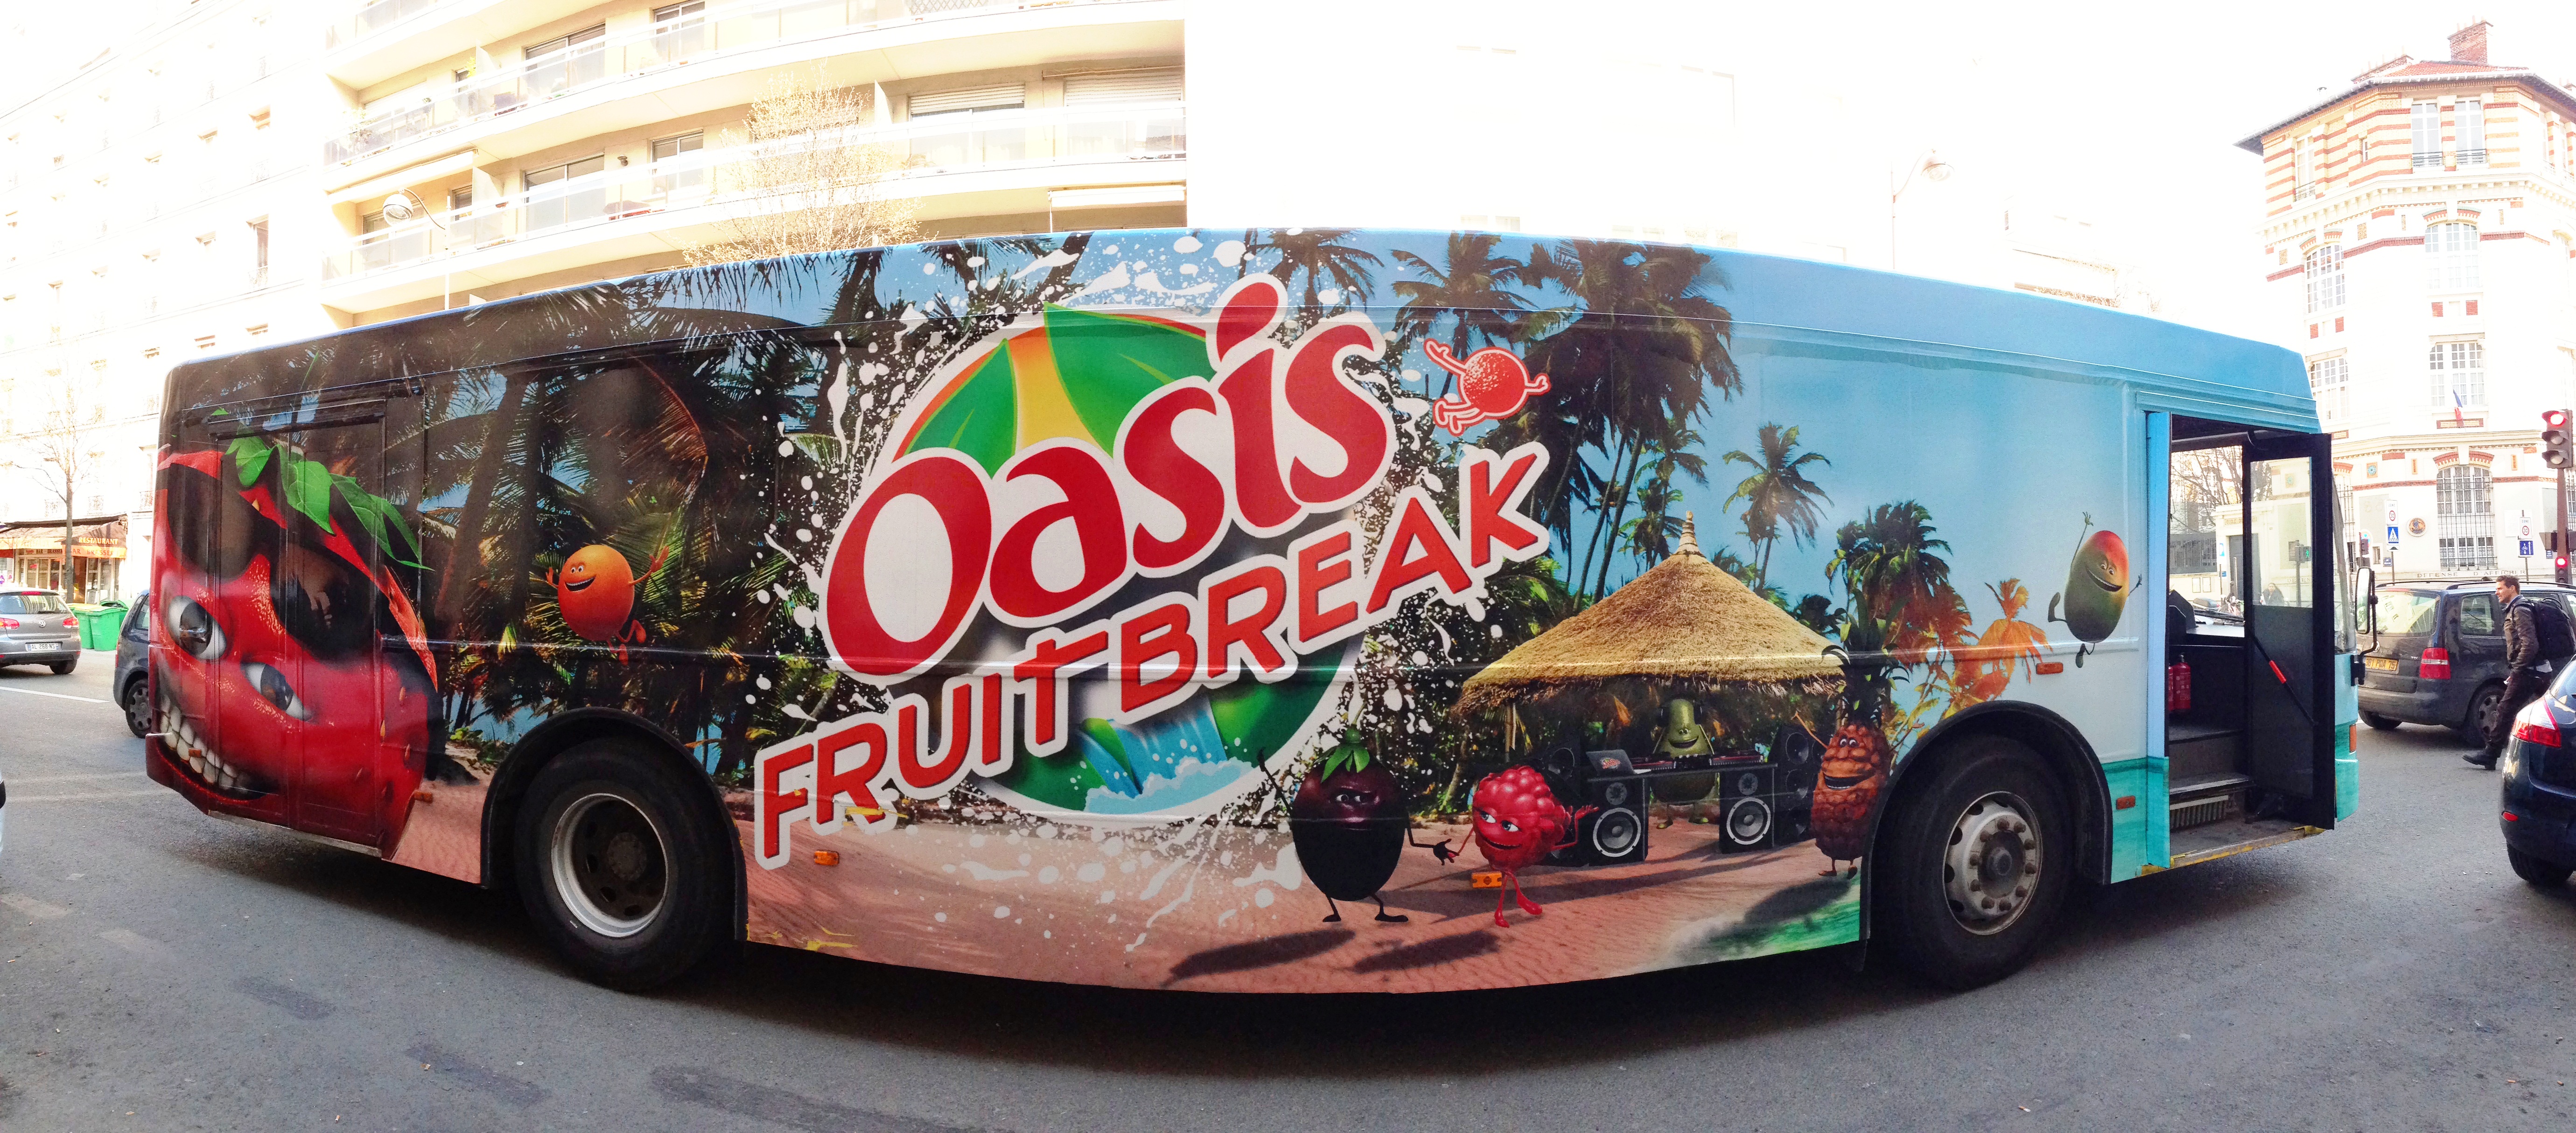 bus oasis fruitbreak